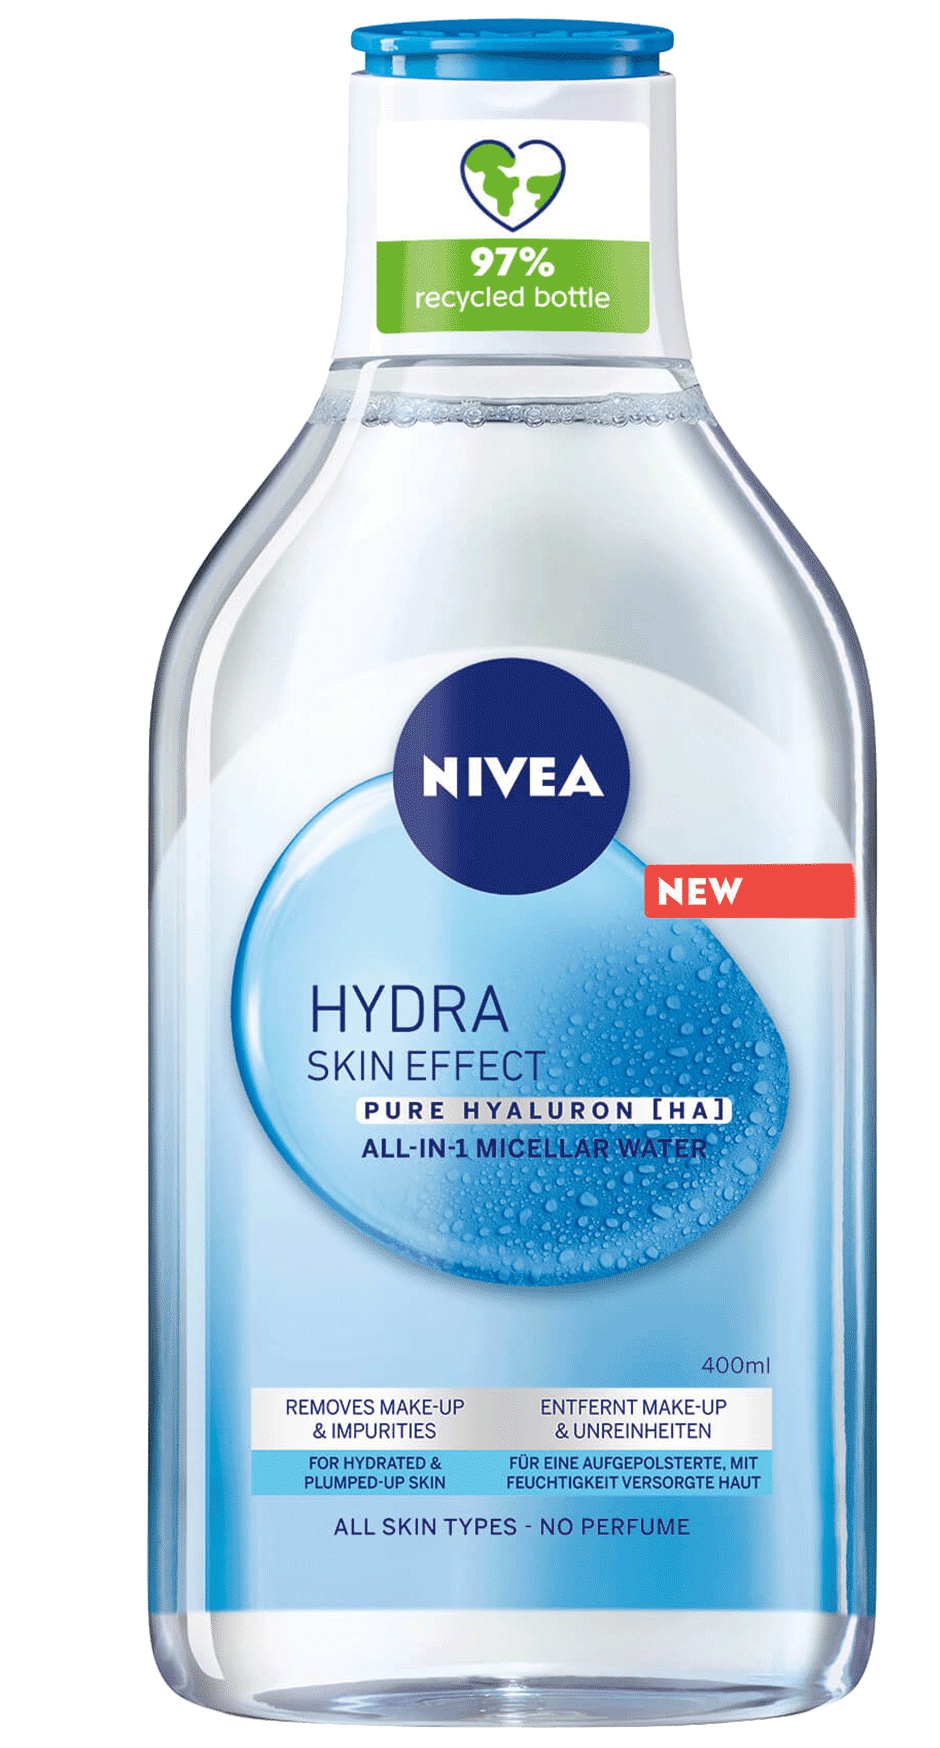 Nivea Hydra Skin Effect All-in-one Micellar Water